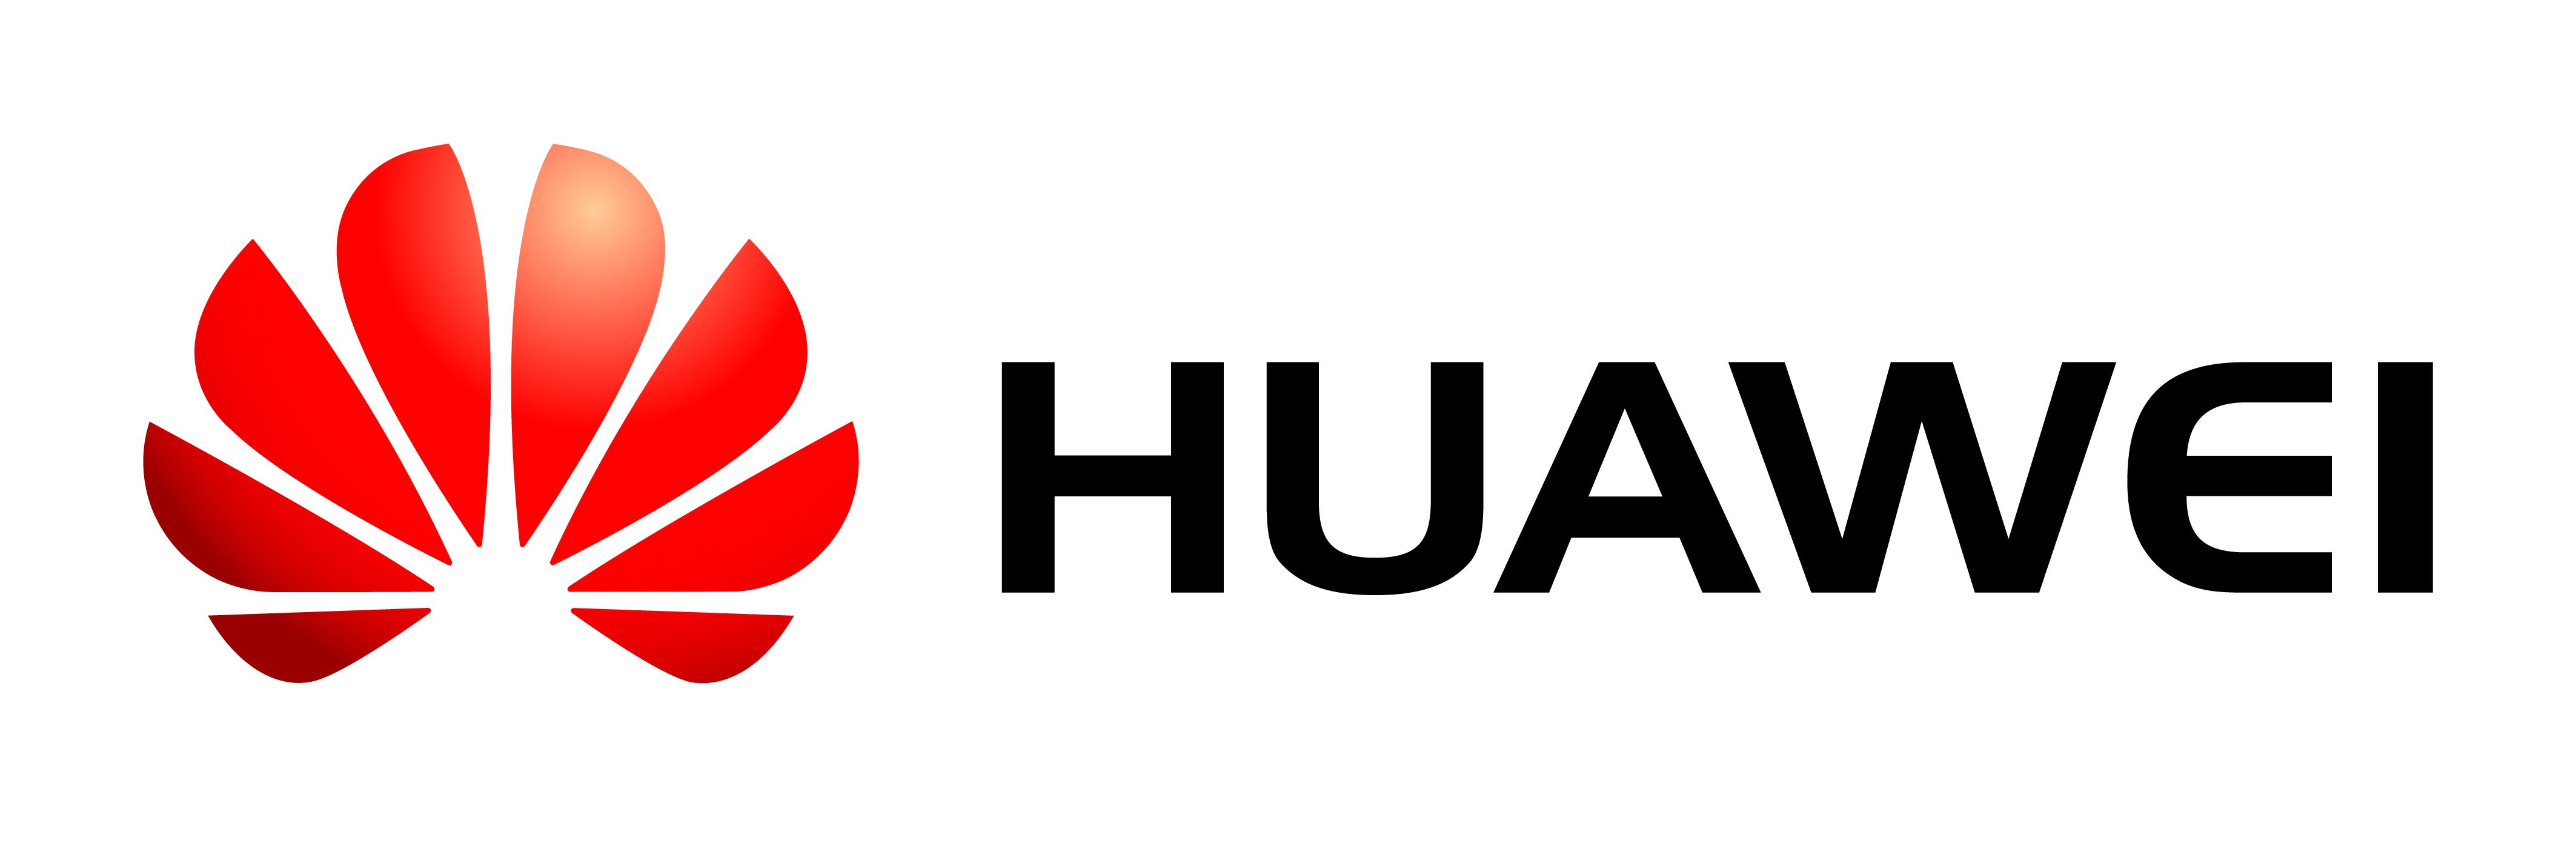 [Actualizado] قد تكون هذه أول نظرة على جهاز Huawei القابل للطي 42